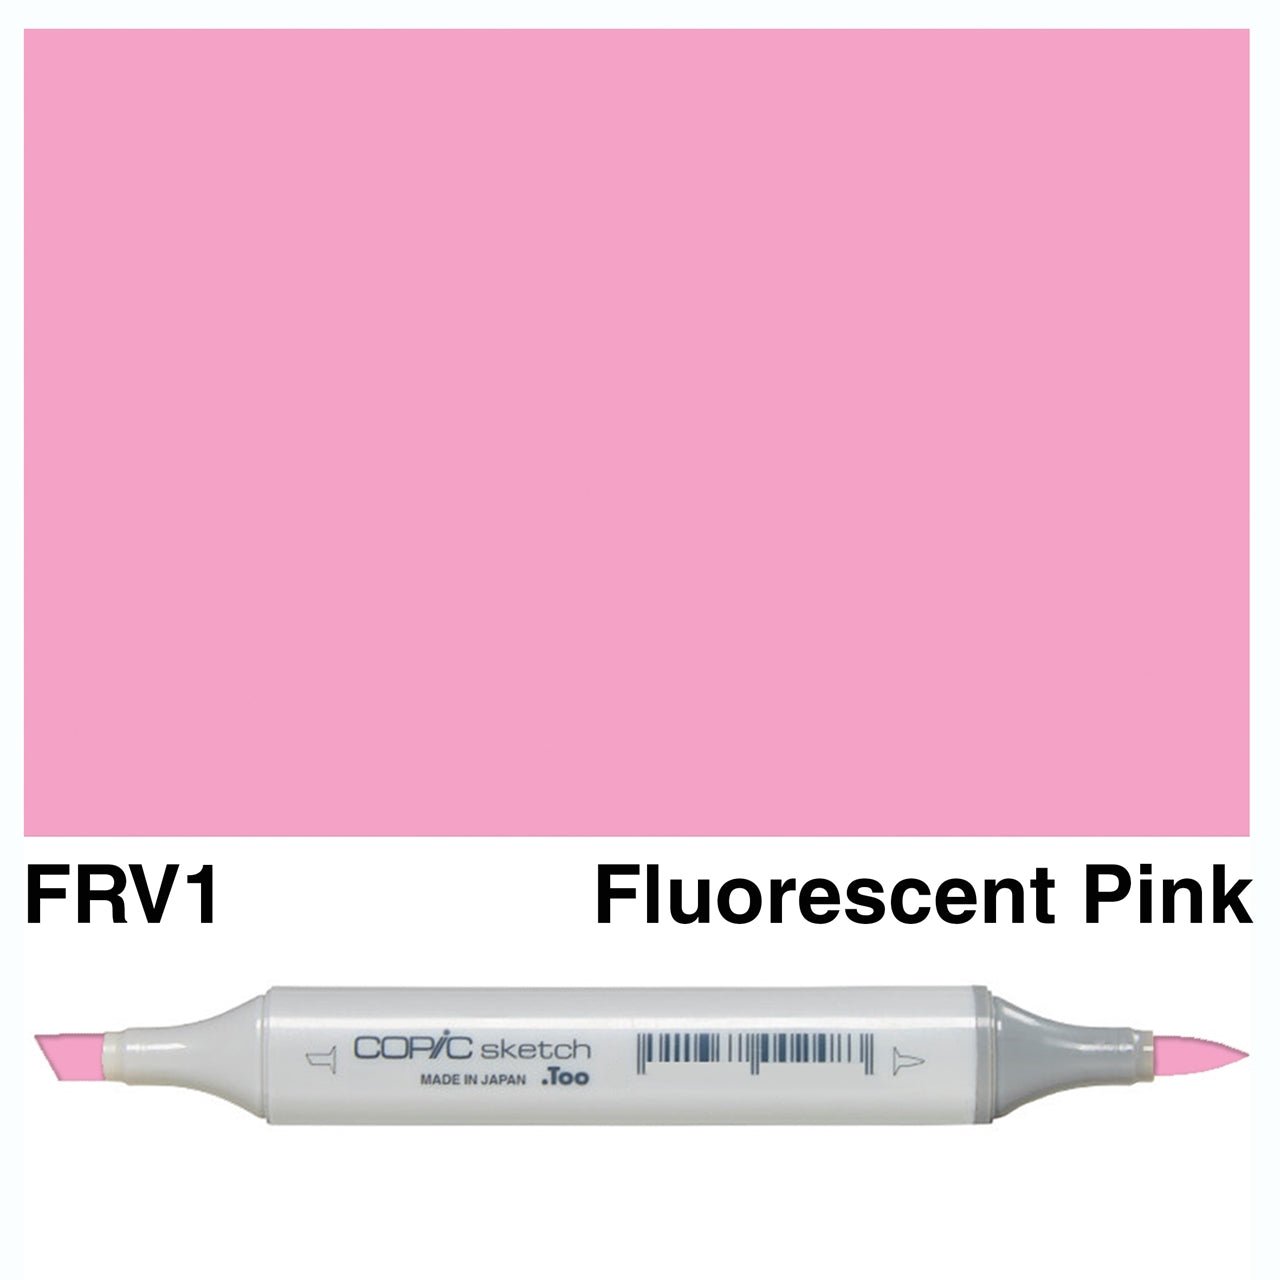 Copic Sketch FRV1 Fluorescent Pink - theartshop.com.au